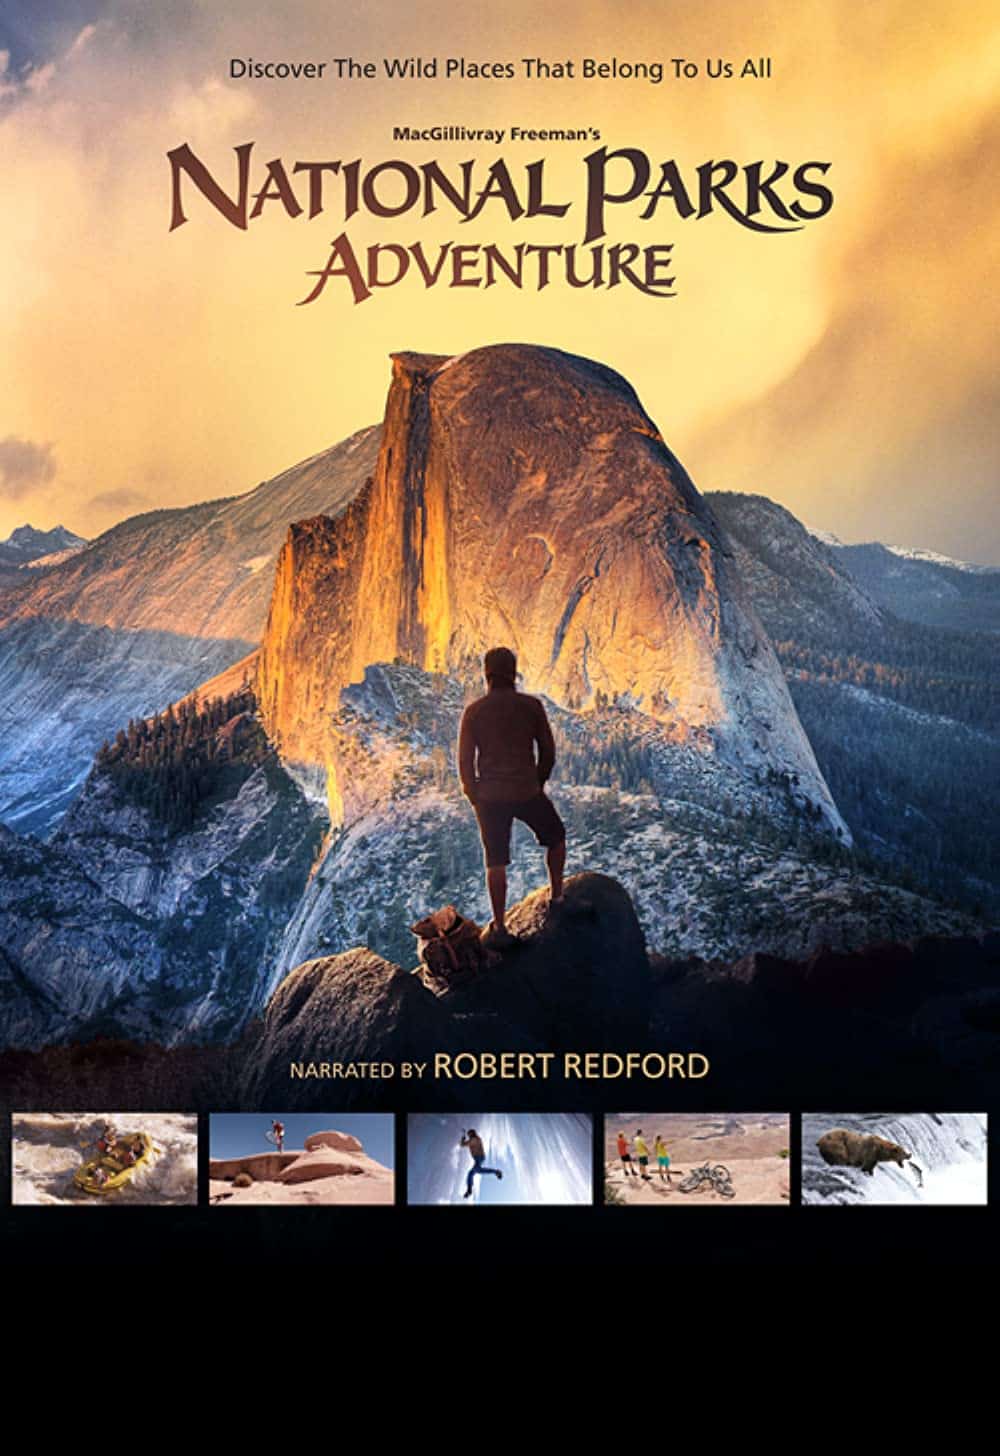 National Parks Adventure (2016) Best Hiking Movies to Binge